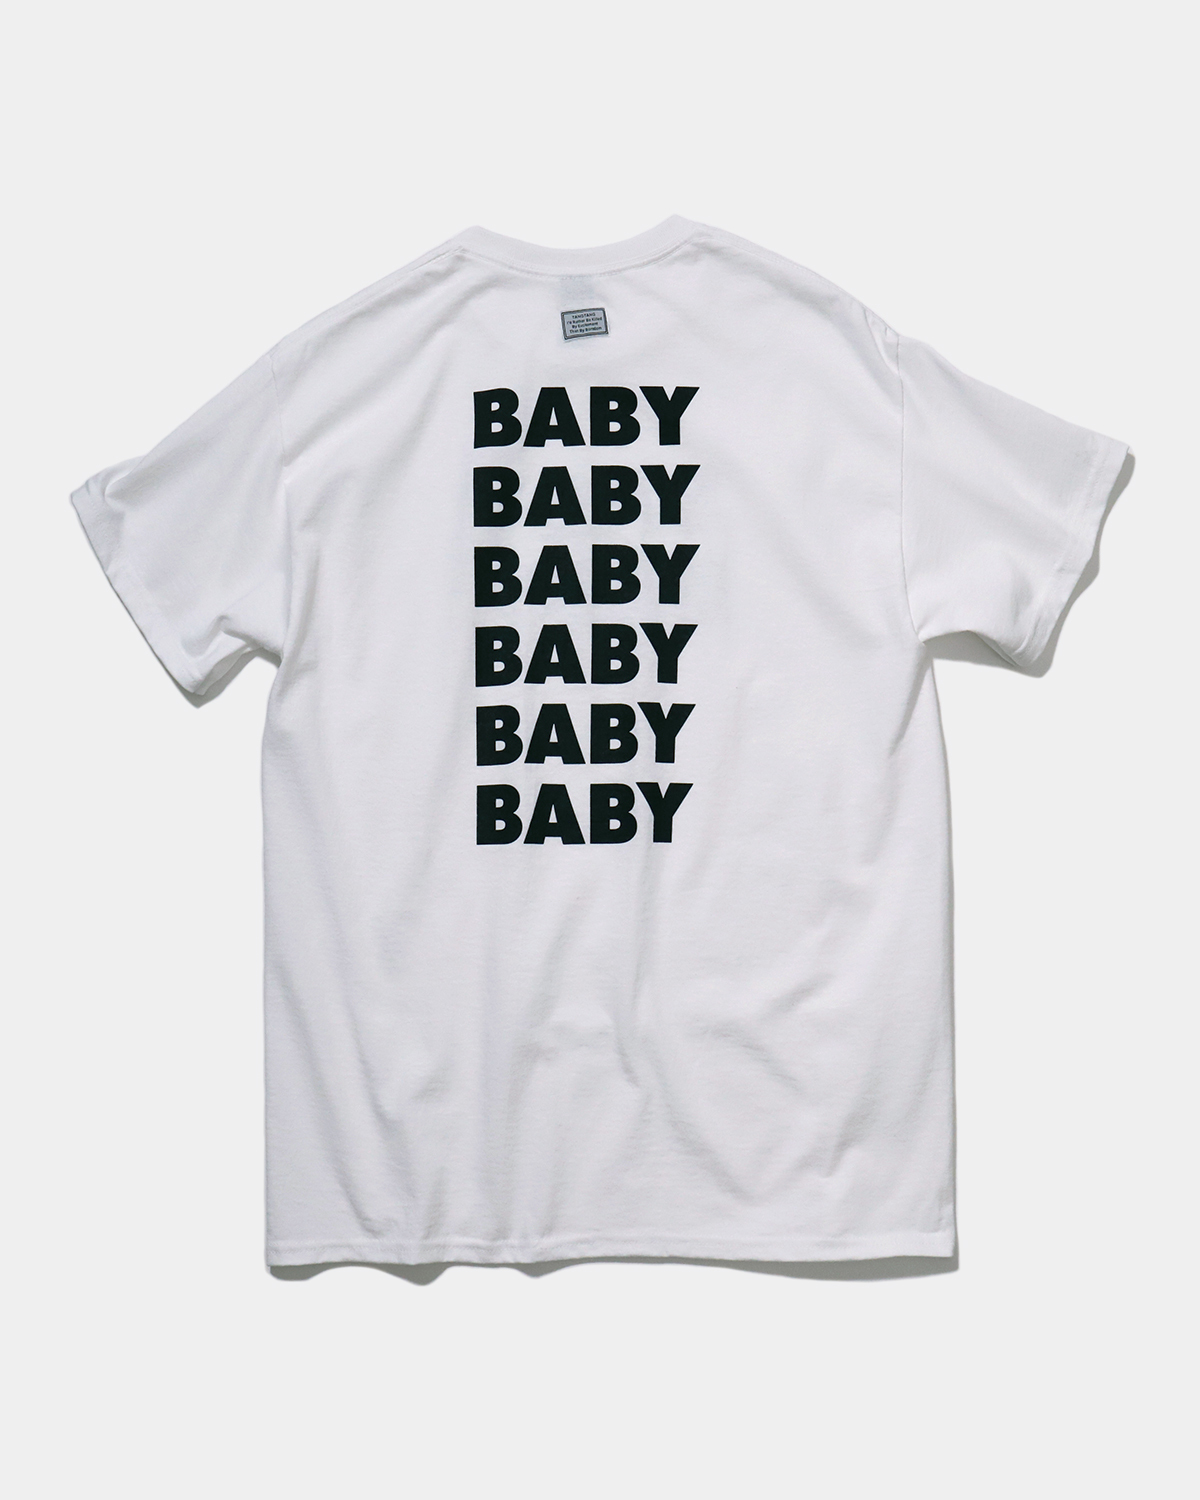 BABYBABY T-Shirt（半袖白ボディ×黒プリント）